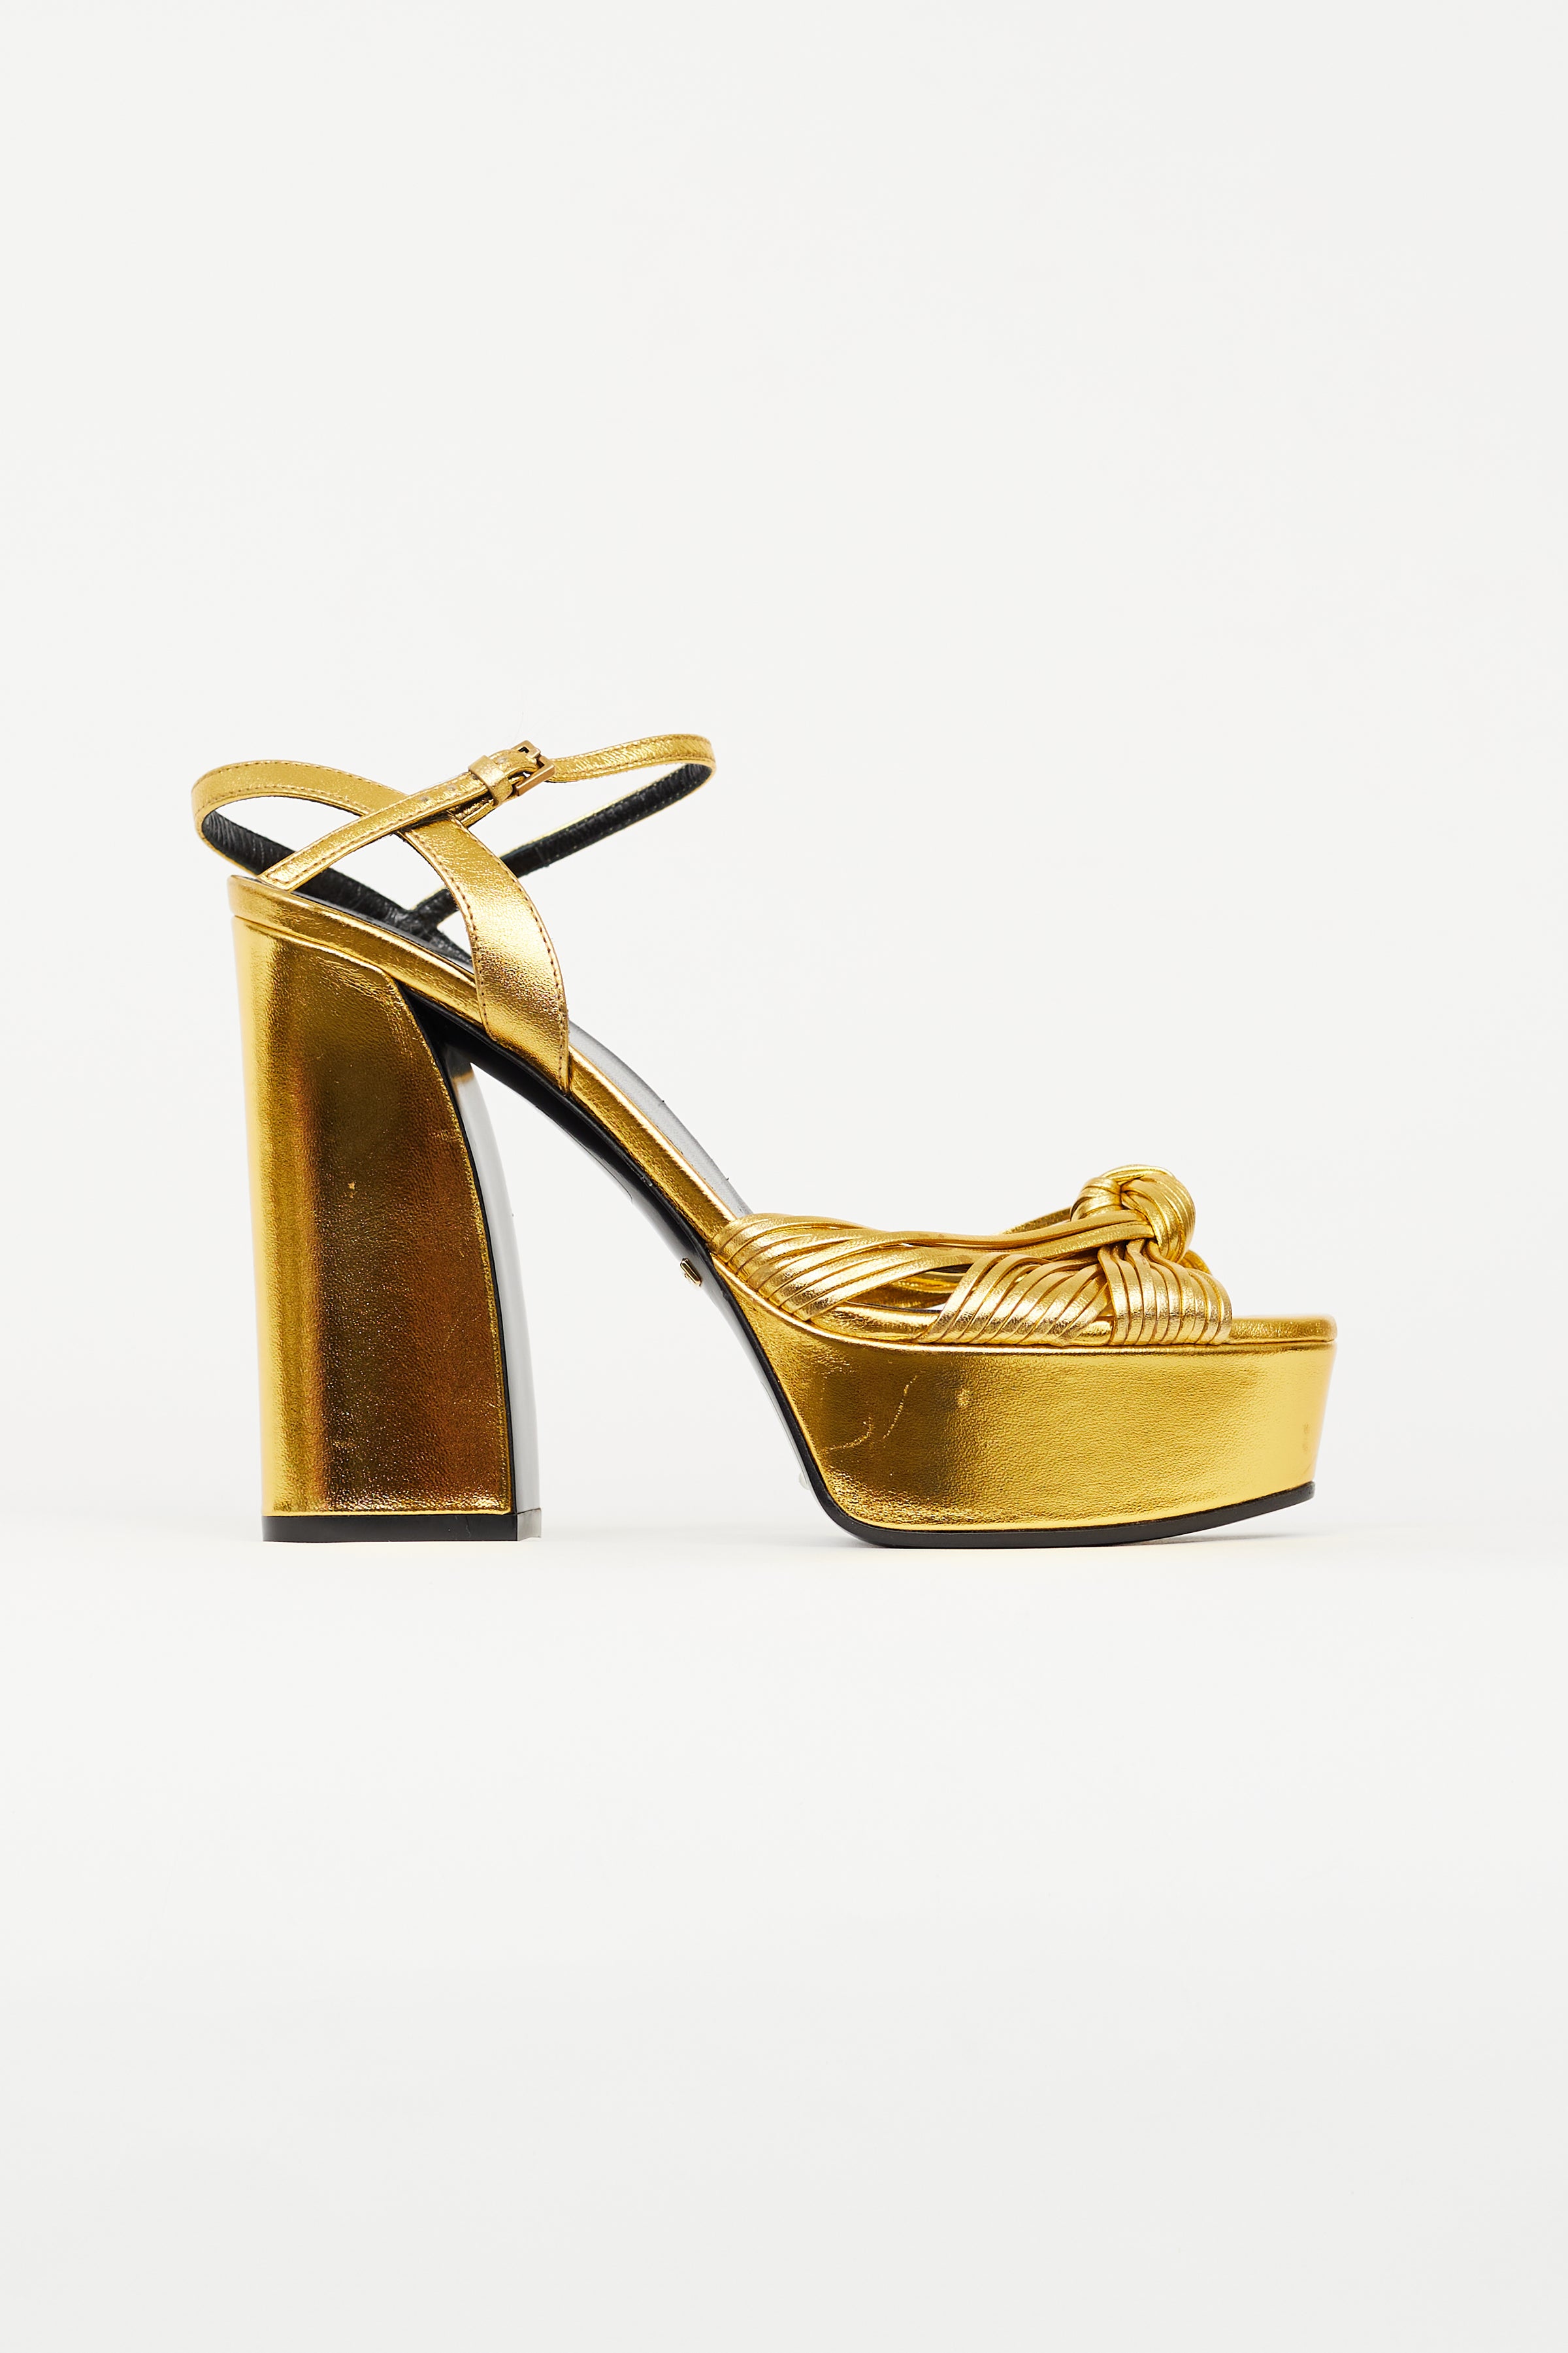 New Gucci sandals | Zapatos de lujo, Tacones, Sandalias gucci